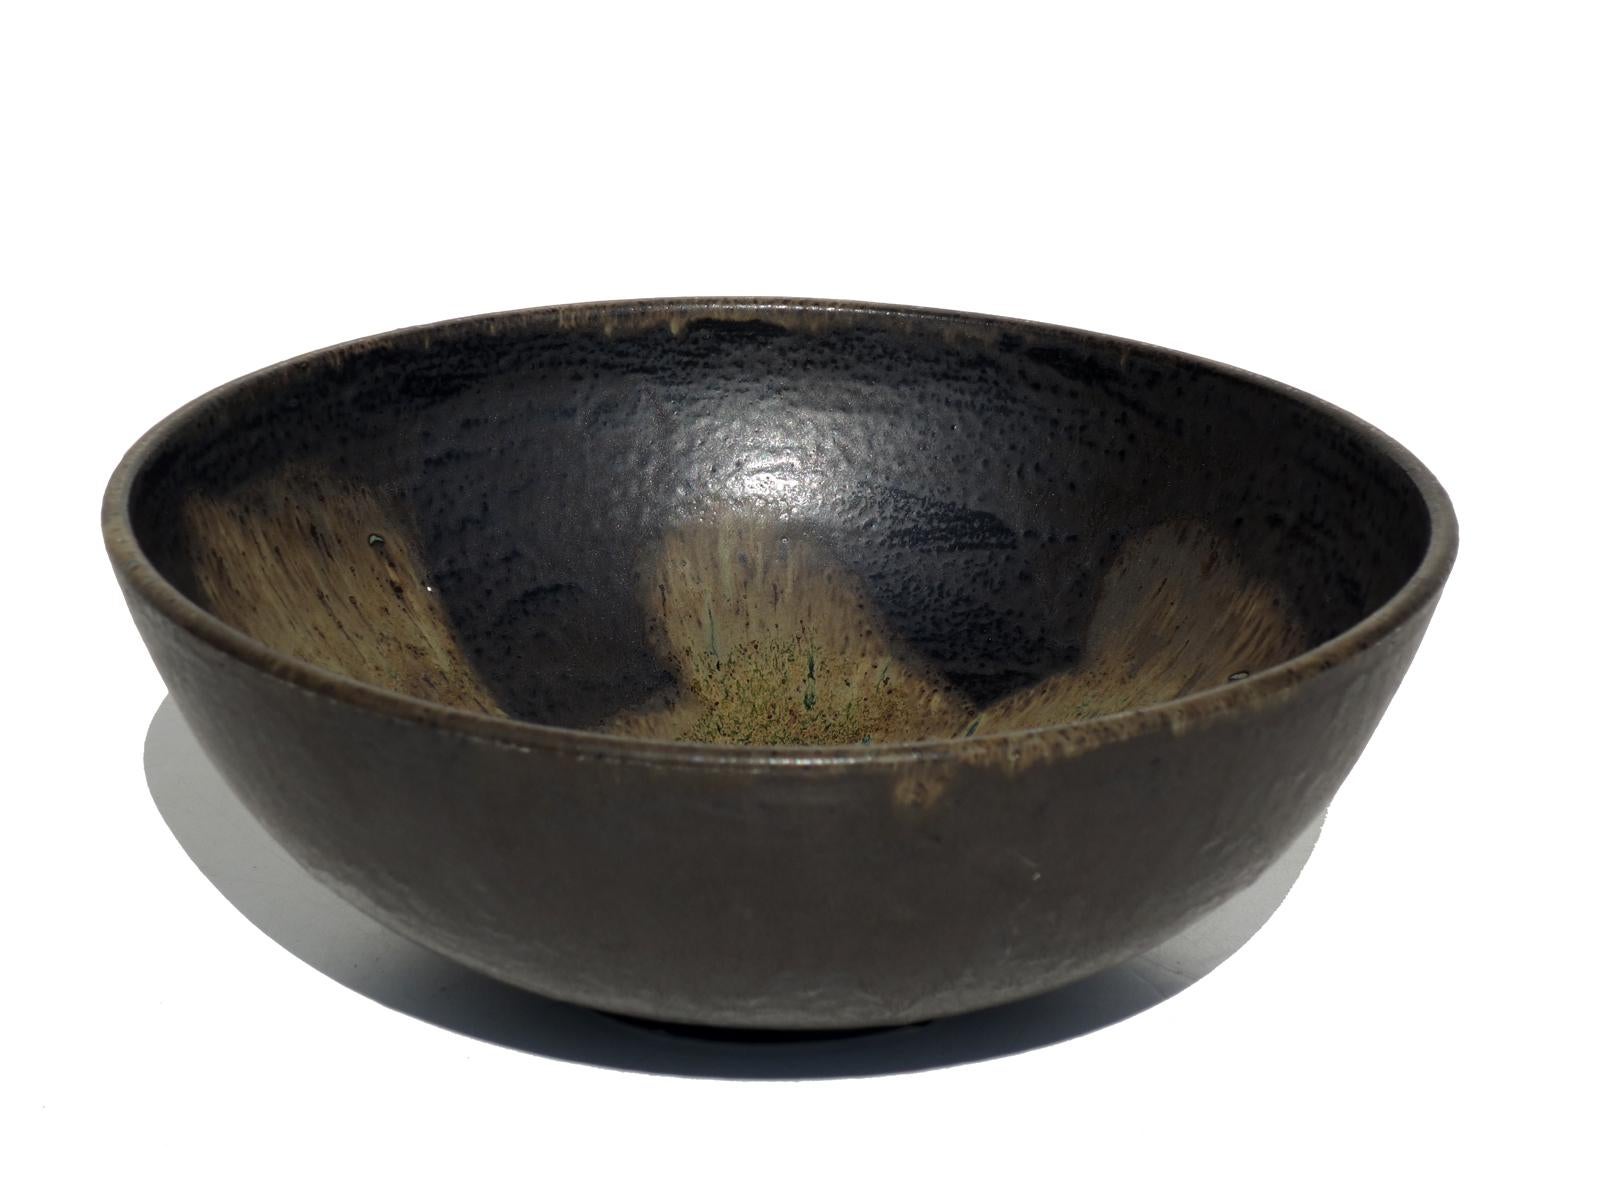 Glazed ceramic bowl.
Perfect Condiction.